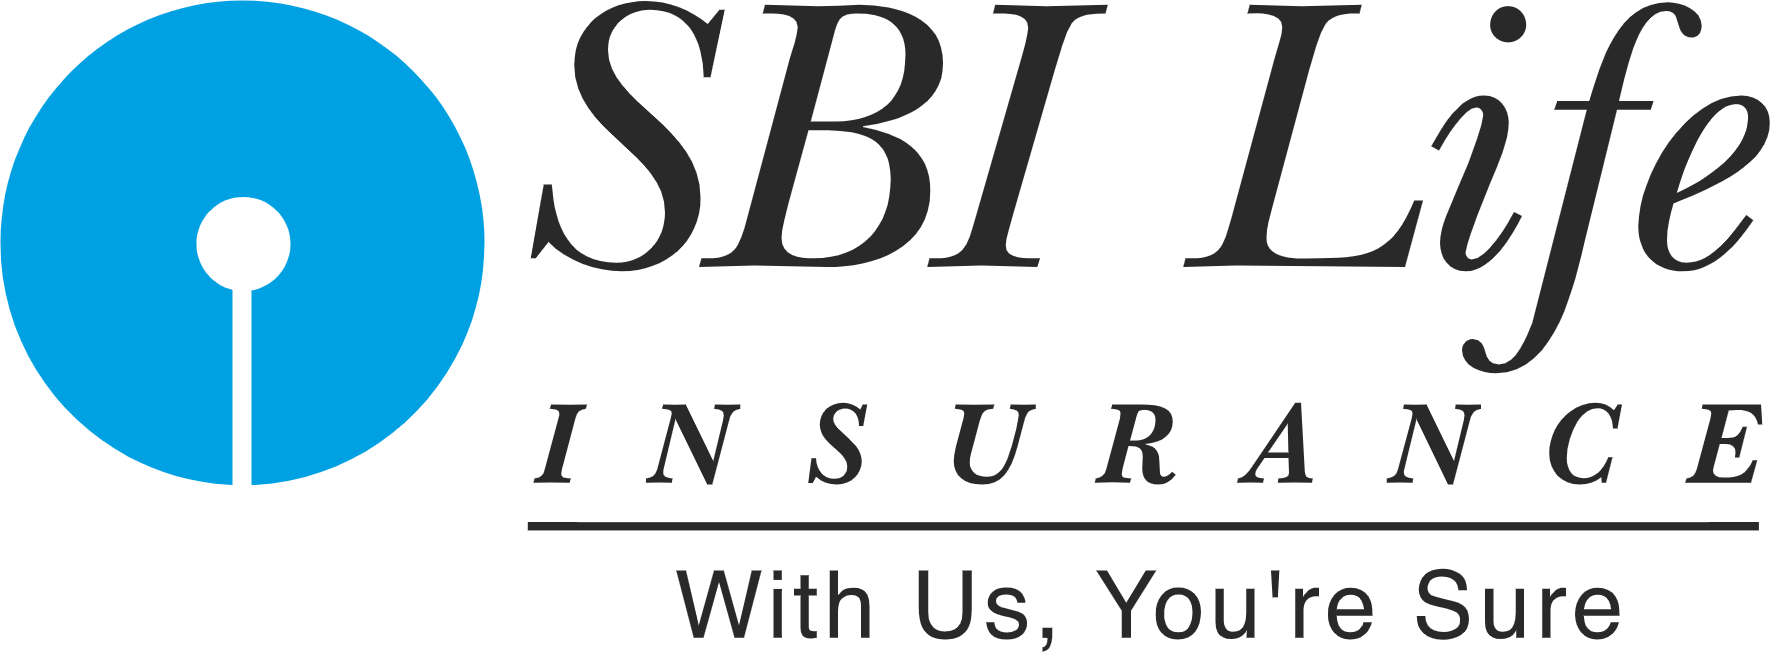 SBI Life Insurance logo large (transparent PNG)